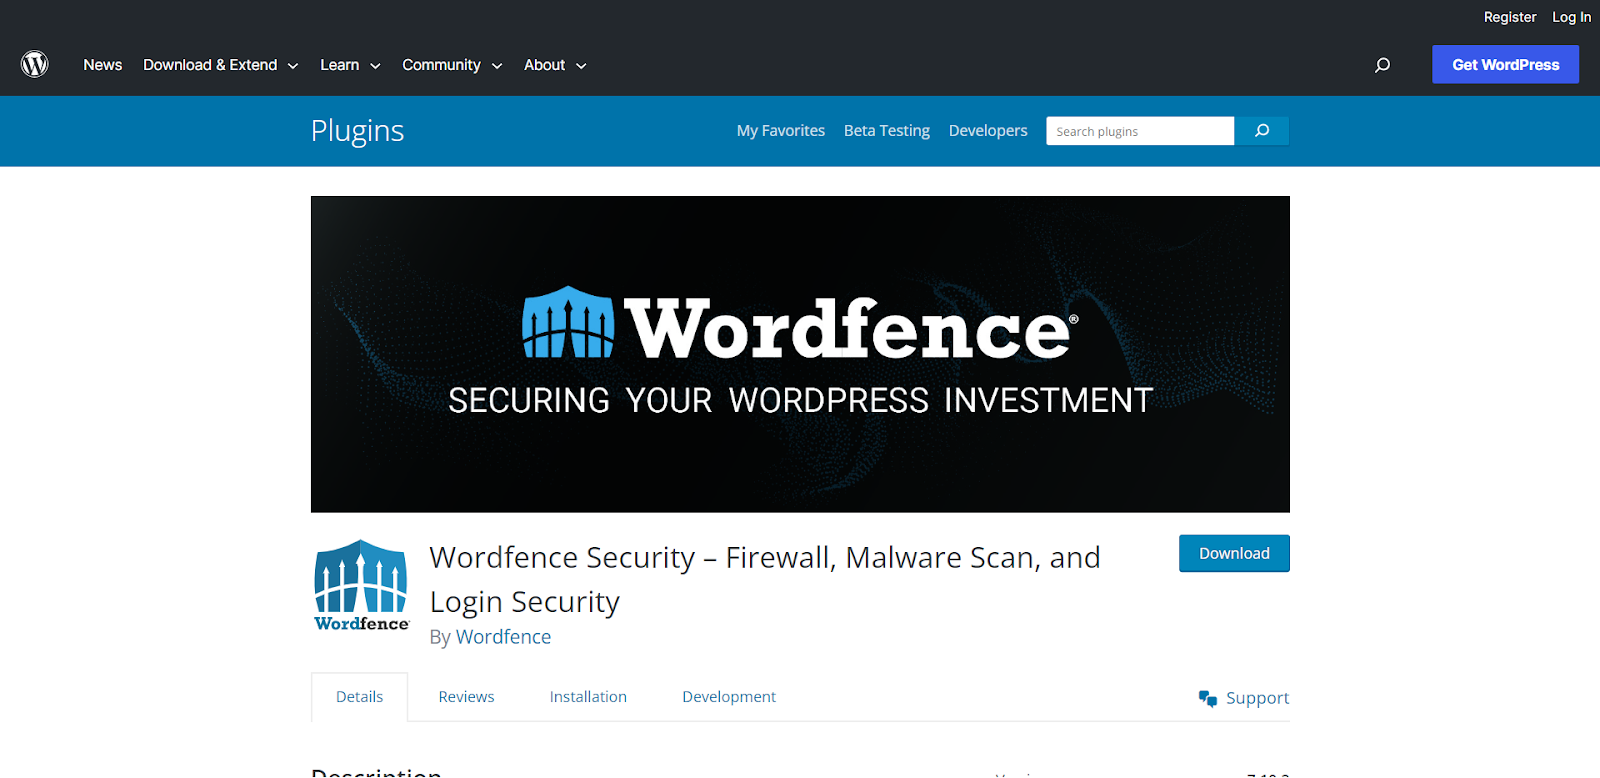 5. Wordfence Security: Firewall, Malware Scan, And Login Security plugin